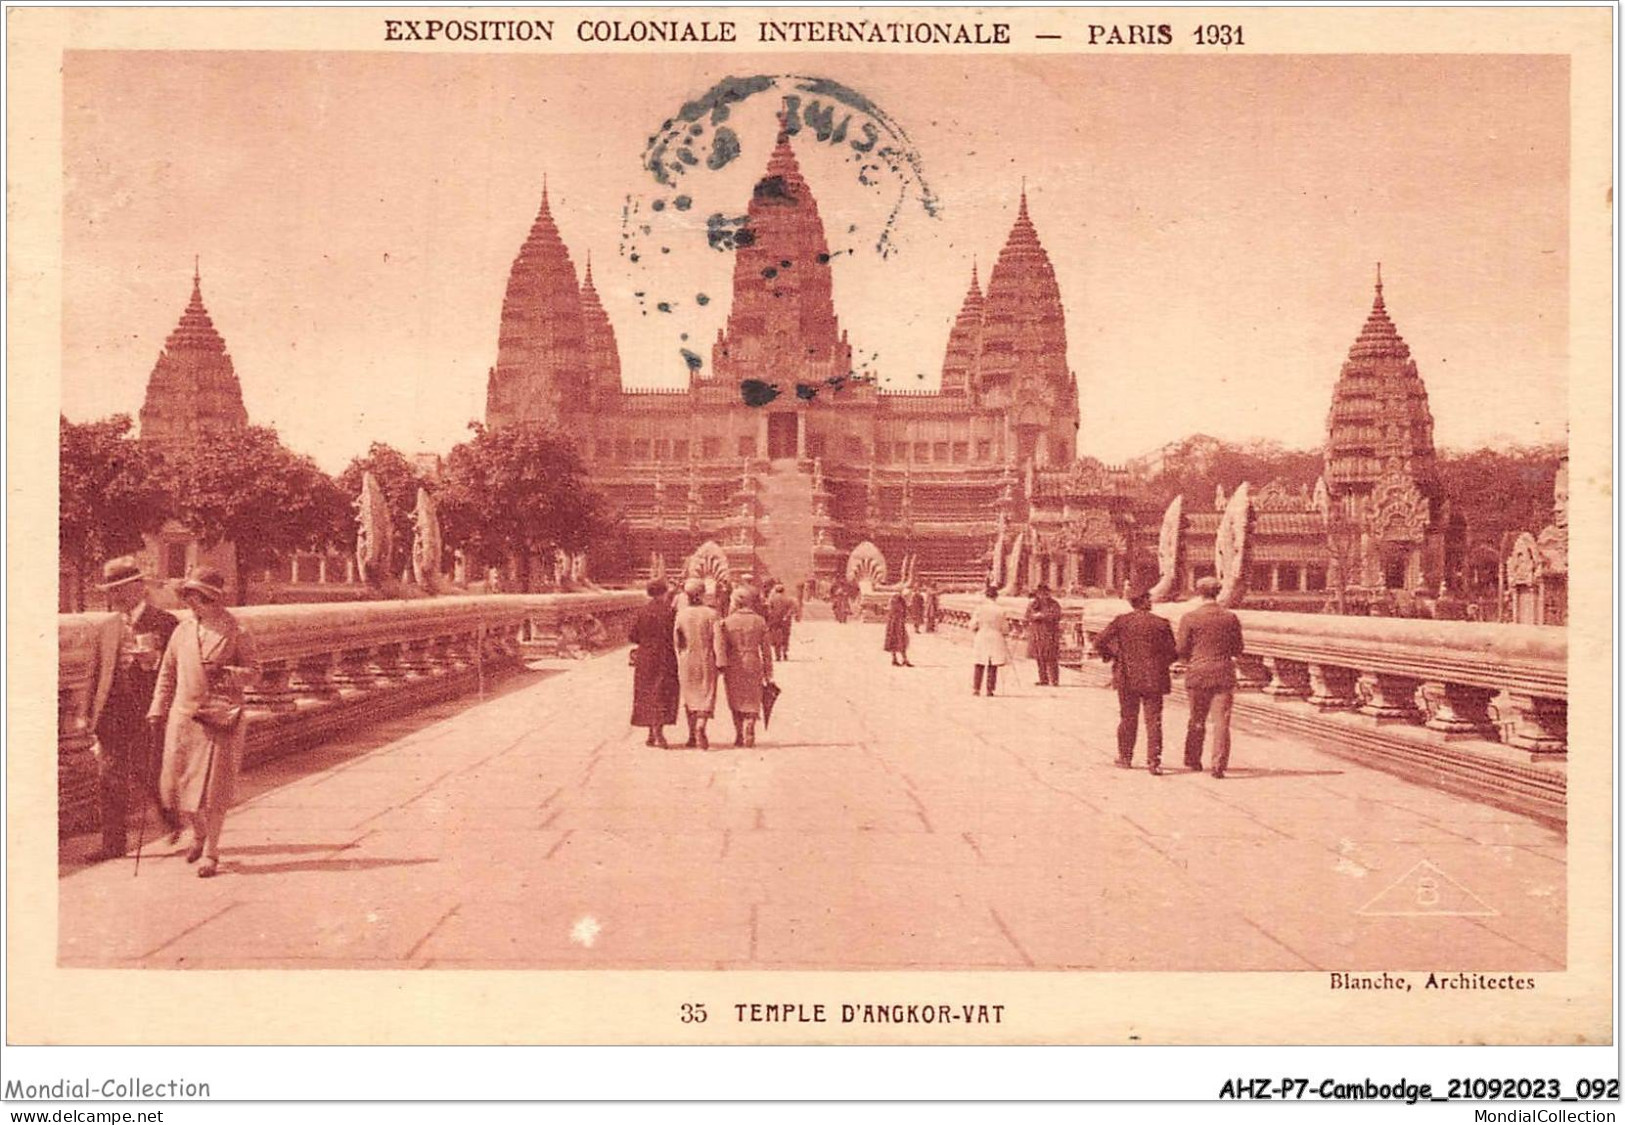 AHZP7-CAMBODGE-0642 - EXPOSITION COLONIALE INTERNATIONALE - PARIS 1931 - TEMPLE D'ANGKOR-VAT - Cambodja